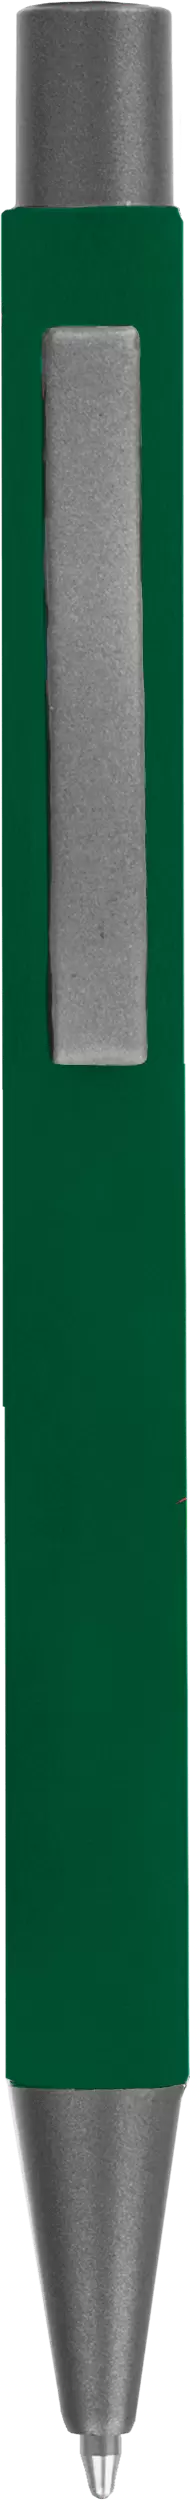 Ручка MAX SOFT TITAN Зеленая 1110-02